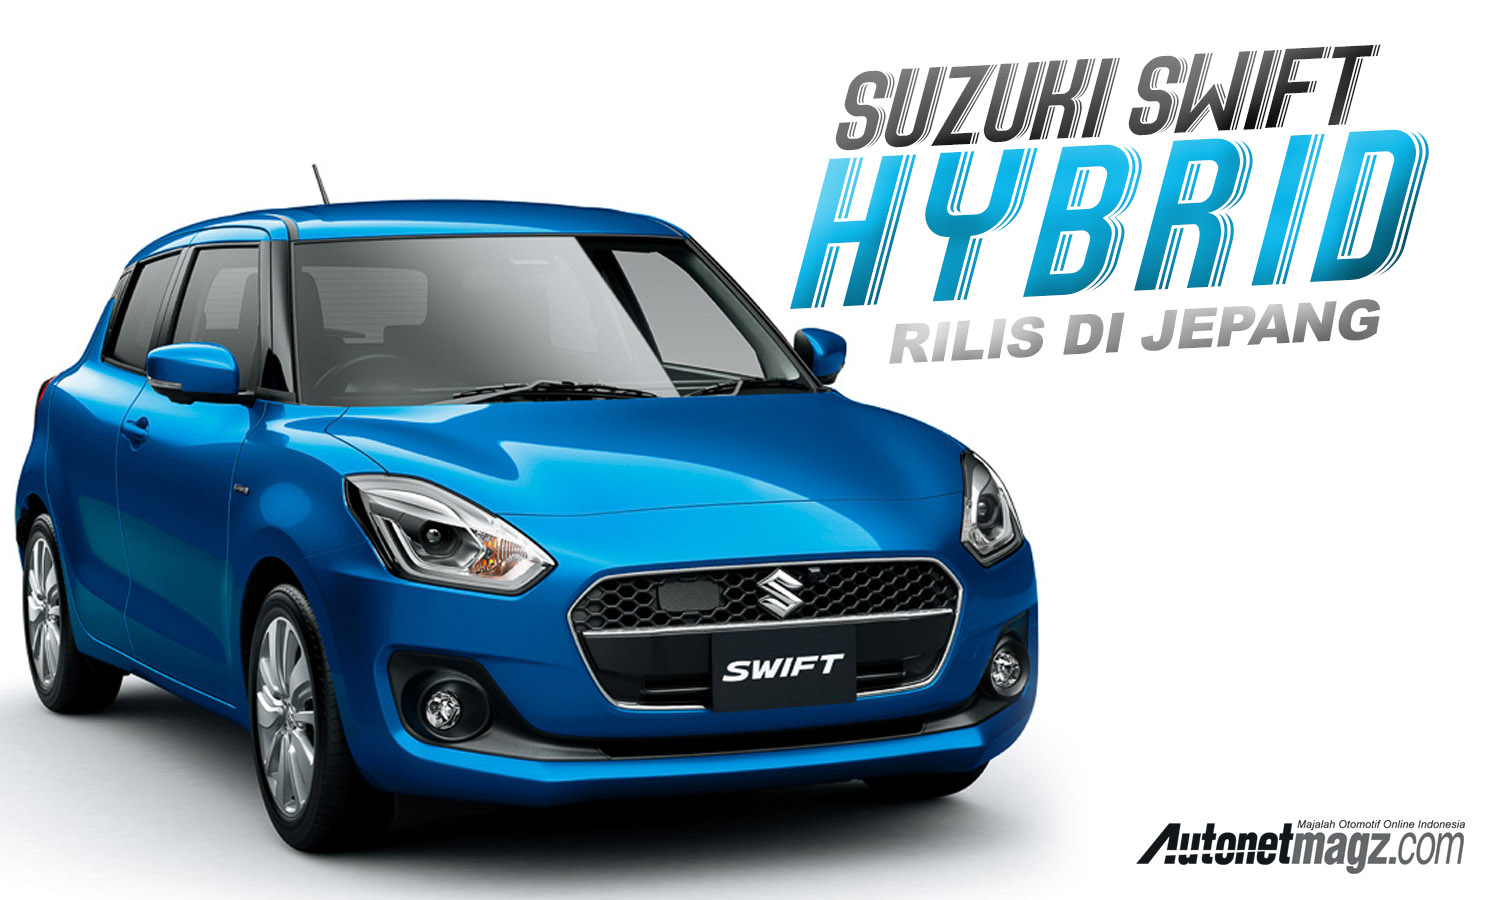 Berita, swift hybrid: Suzuki Swift Hybrid Dirilis di Jepang, Mampu 32 Km/Liter